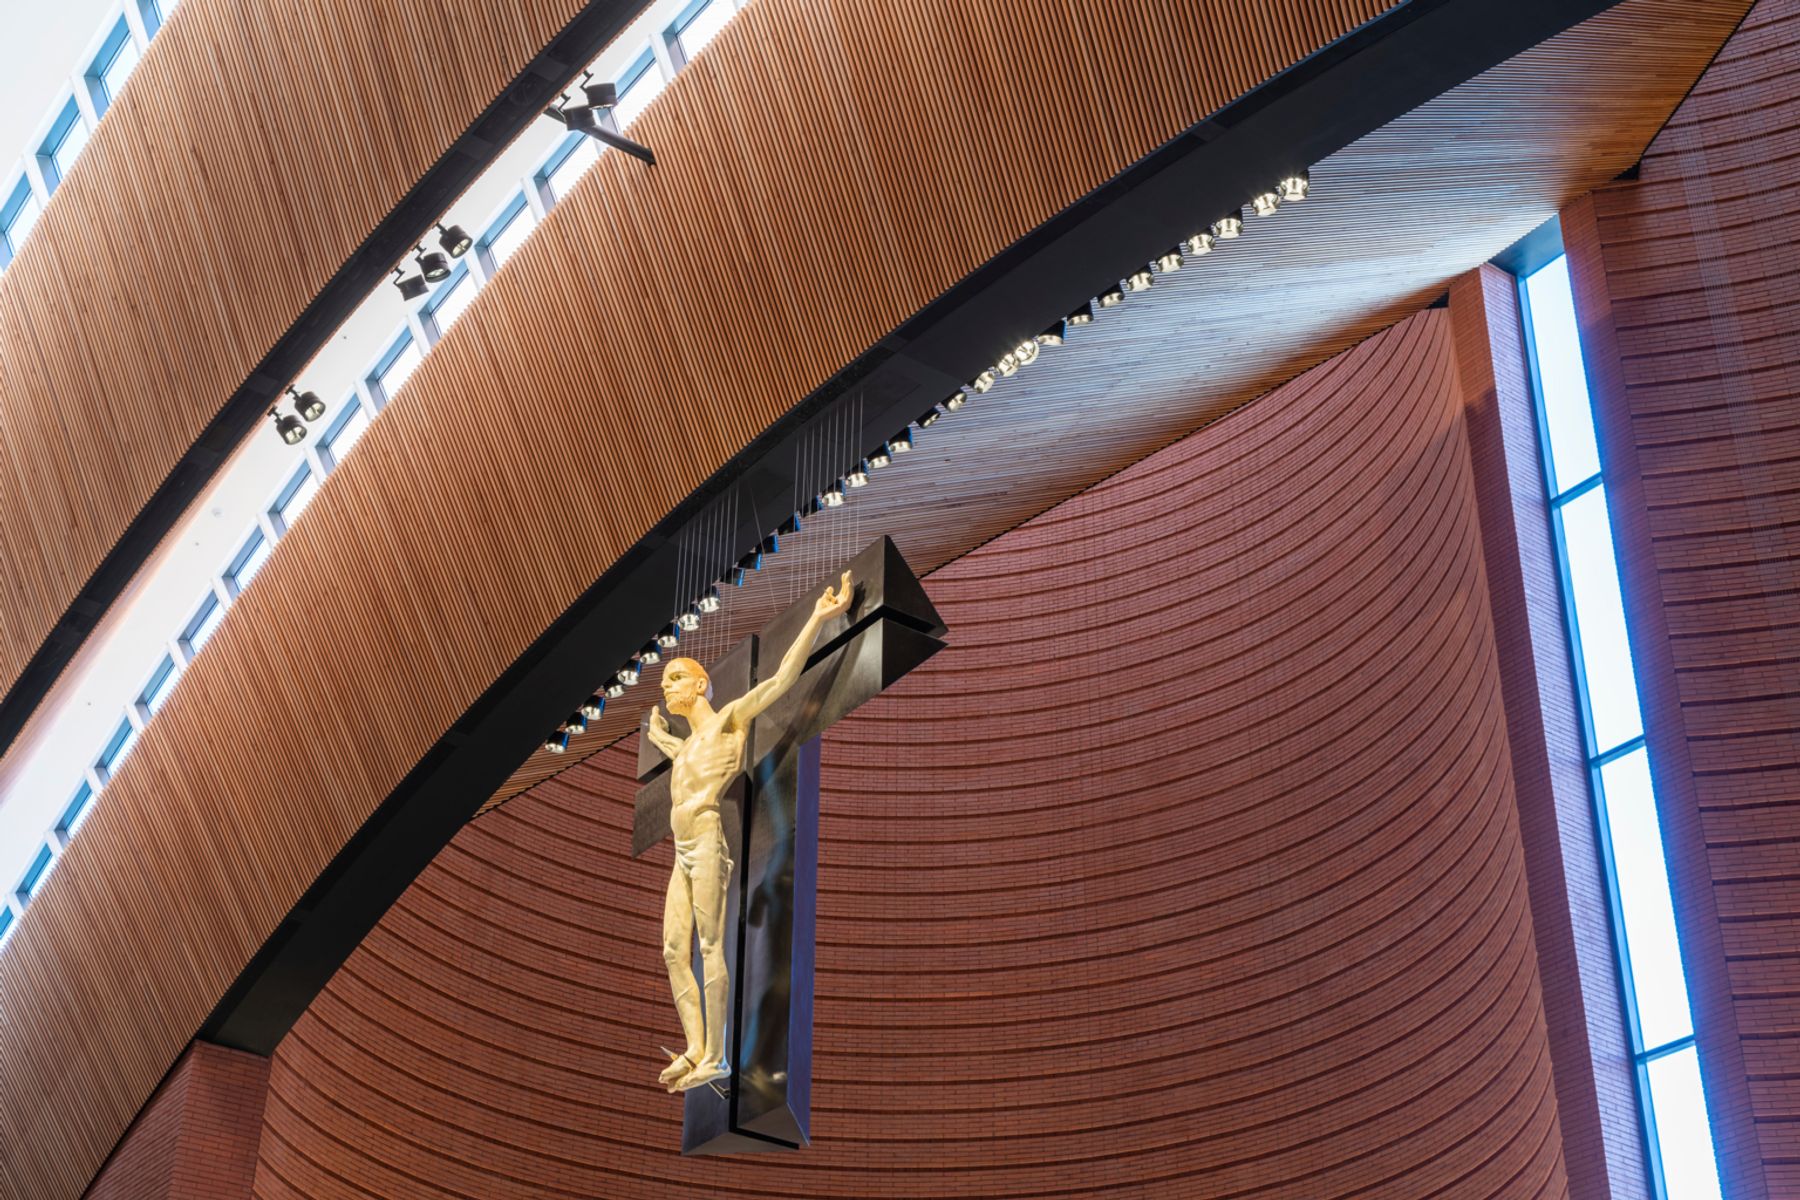 The Shrine of our Lady Rosary of NamYang, South Korea. Architect: Mario Botta, Mendrisio. Lighting design: bitzro & partners, Seoul. Photography: Efrain Mendez Tabares, Spain